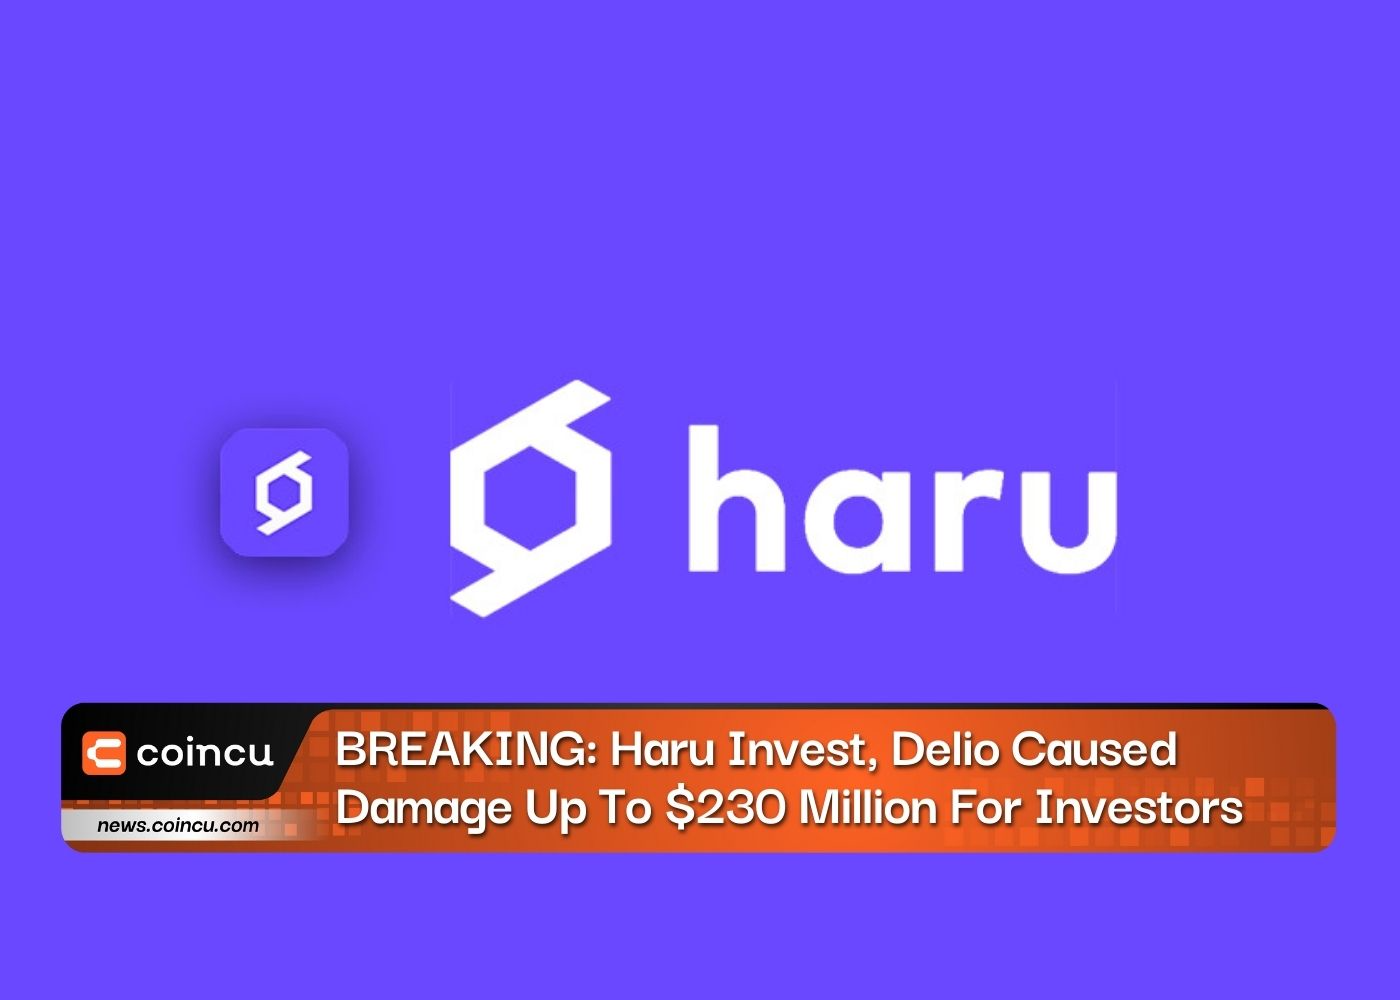 BREAKING: Haru Invest, Delio Caused Damage Up To $230 Million For Investors